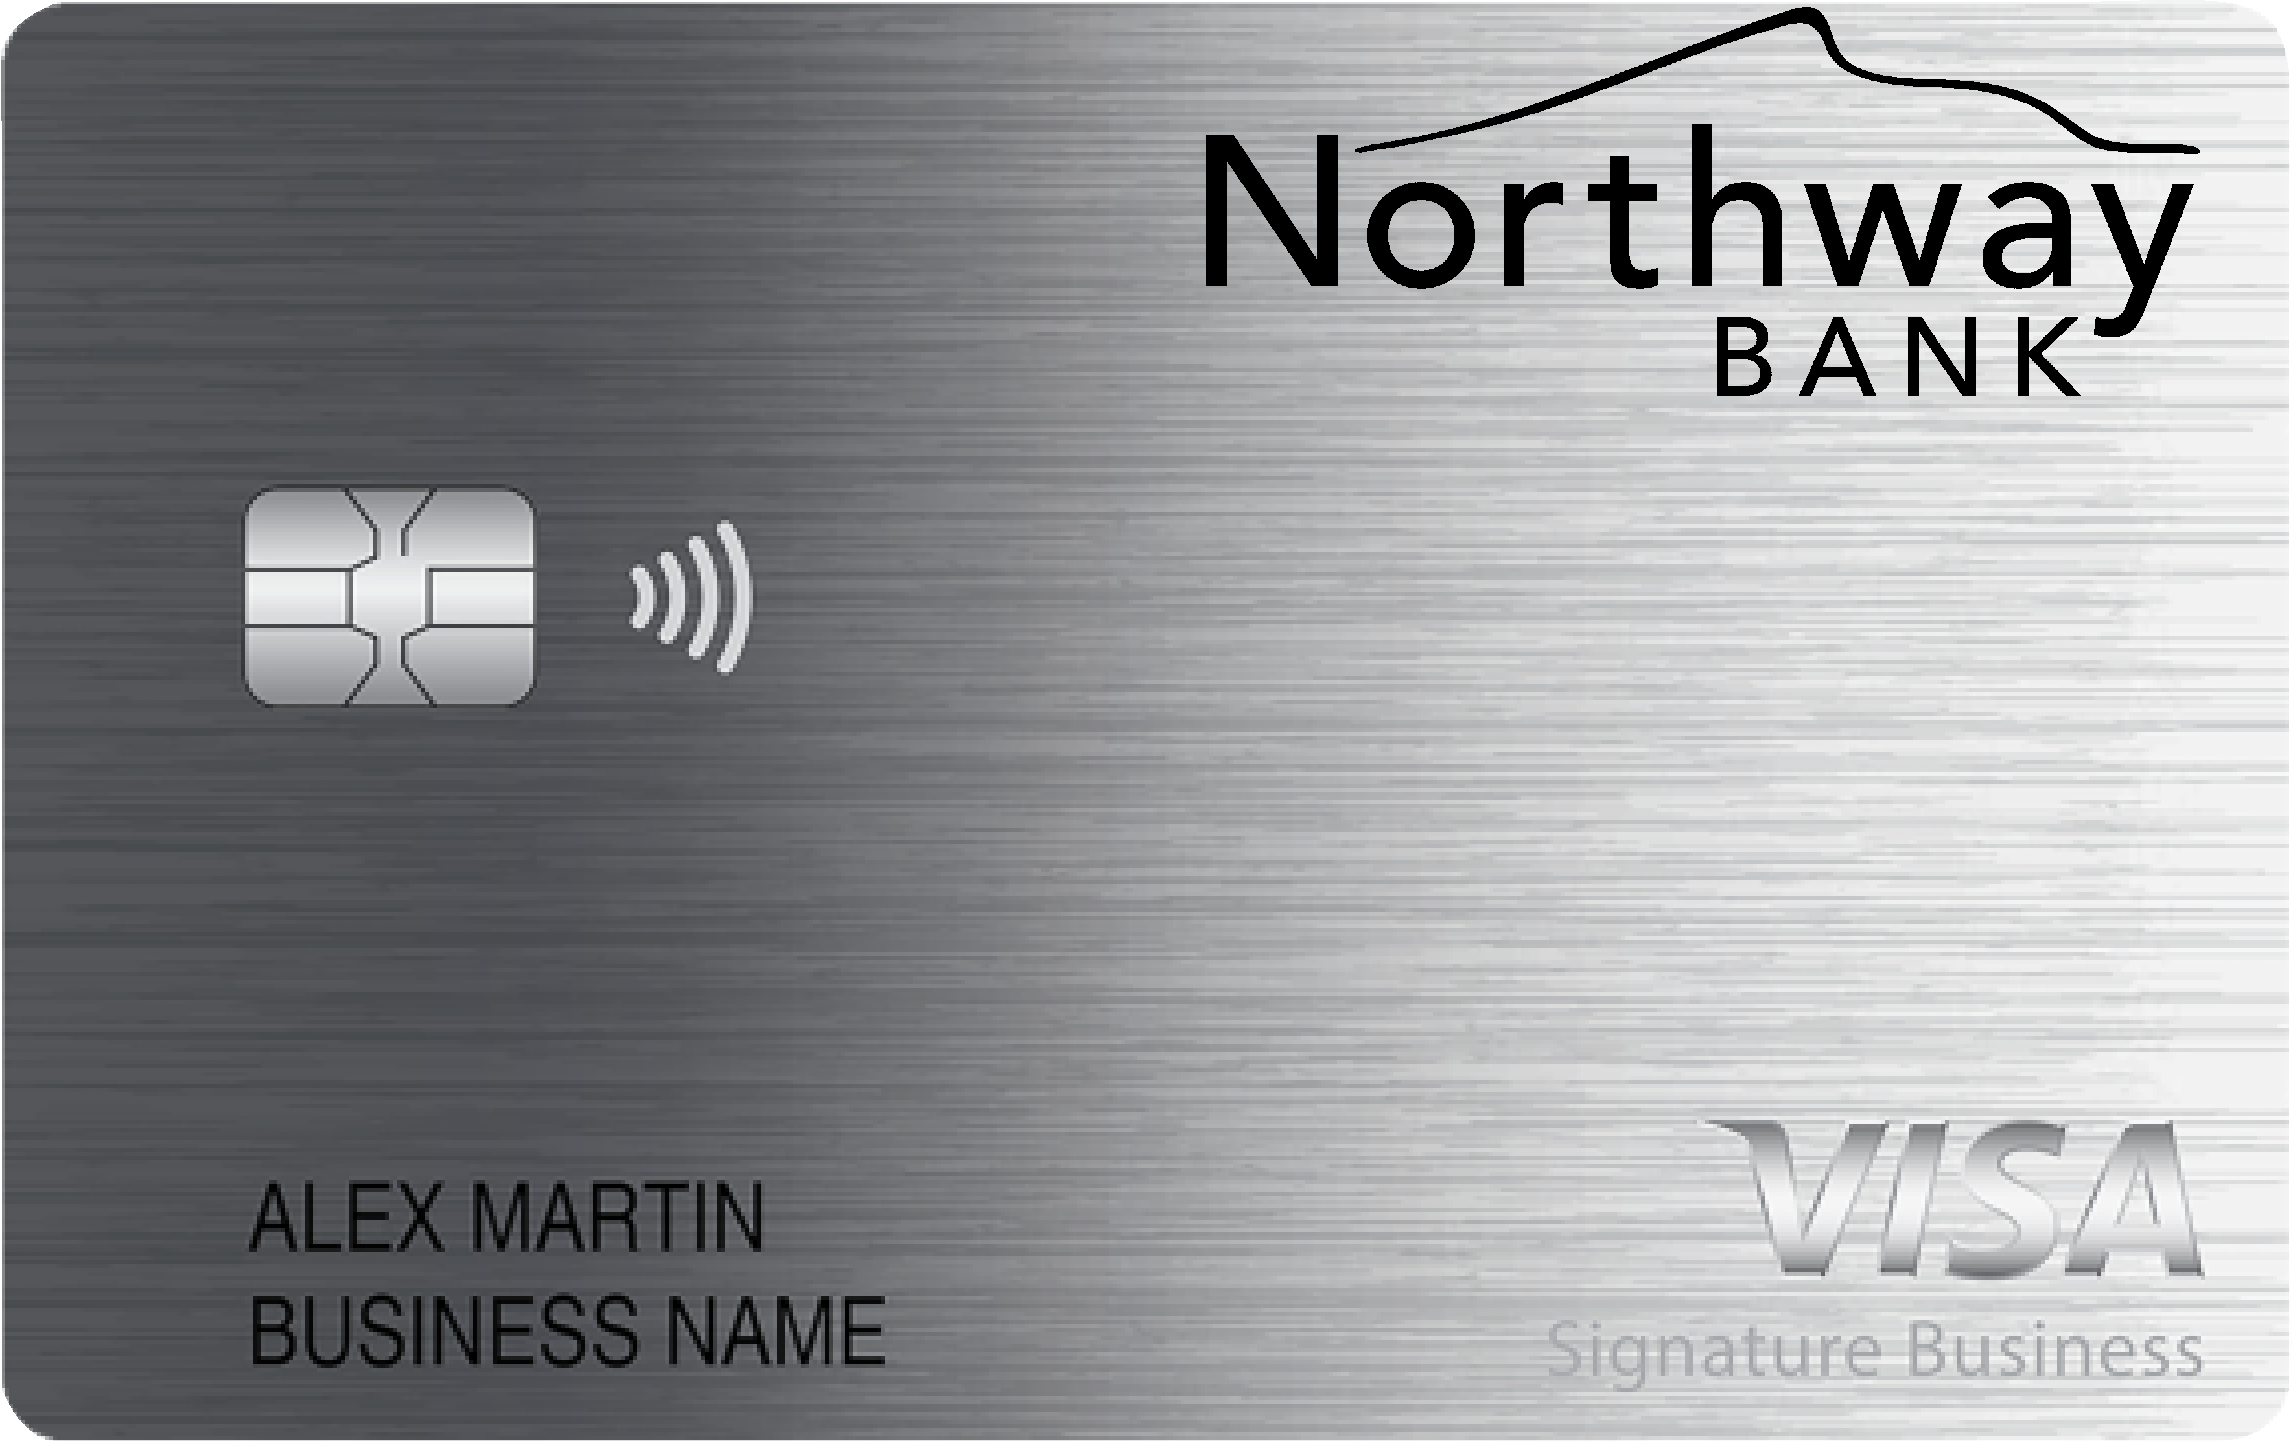 Northway Bank Smart Business Rewards Card